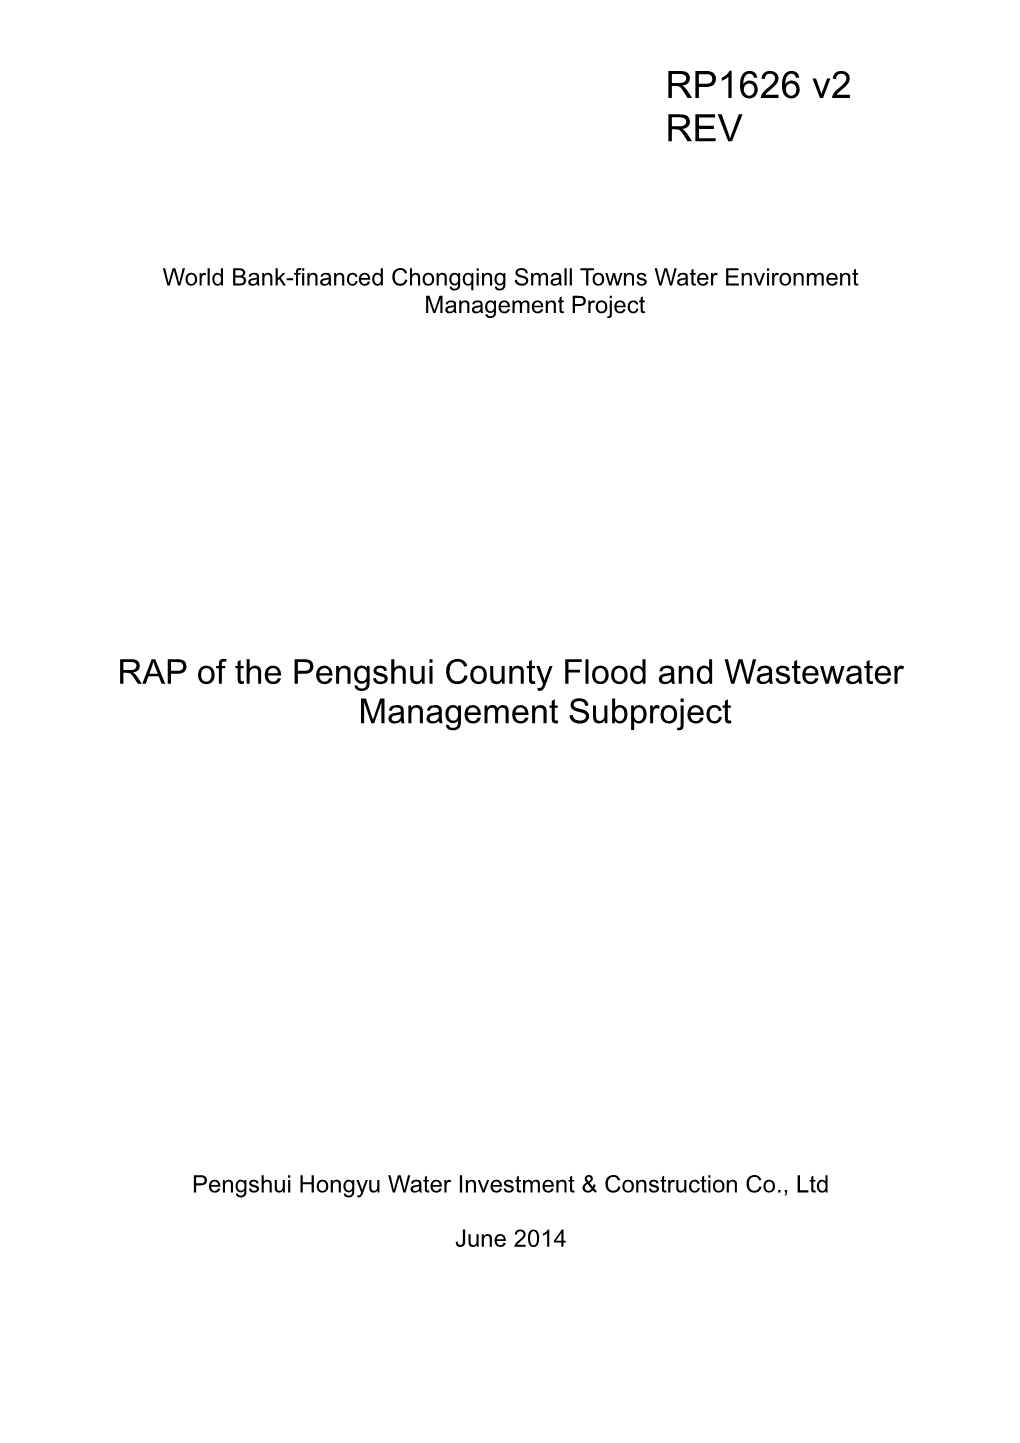 World Bank-Financed Chongqing Small Towns Water Environment Management Project